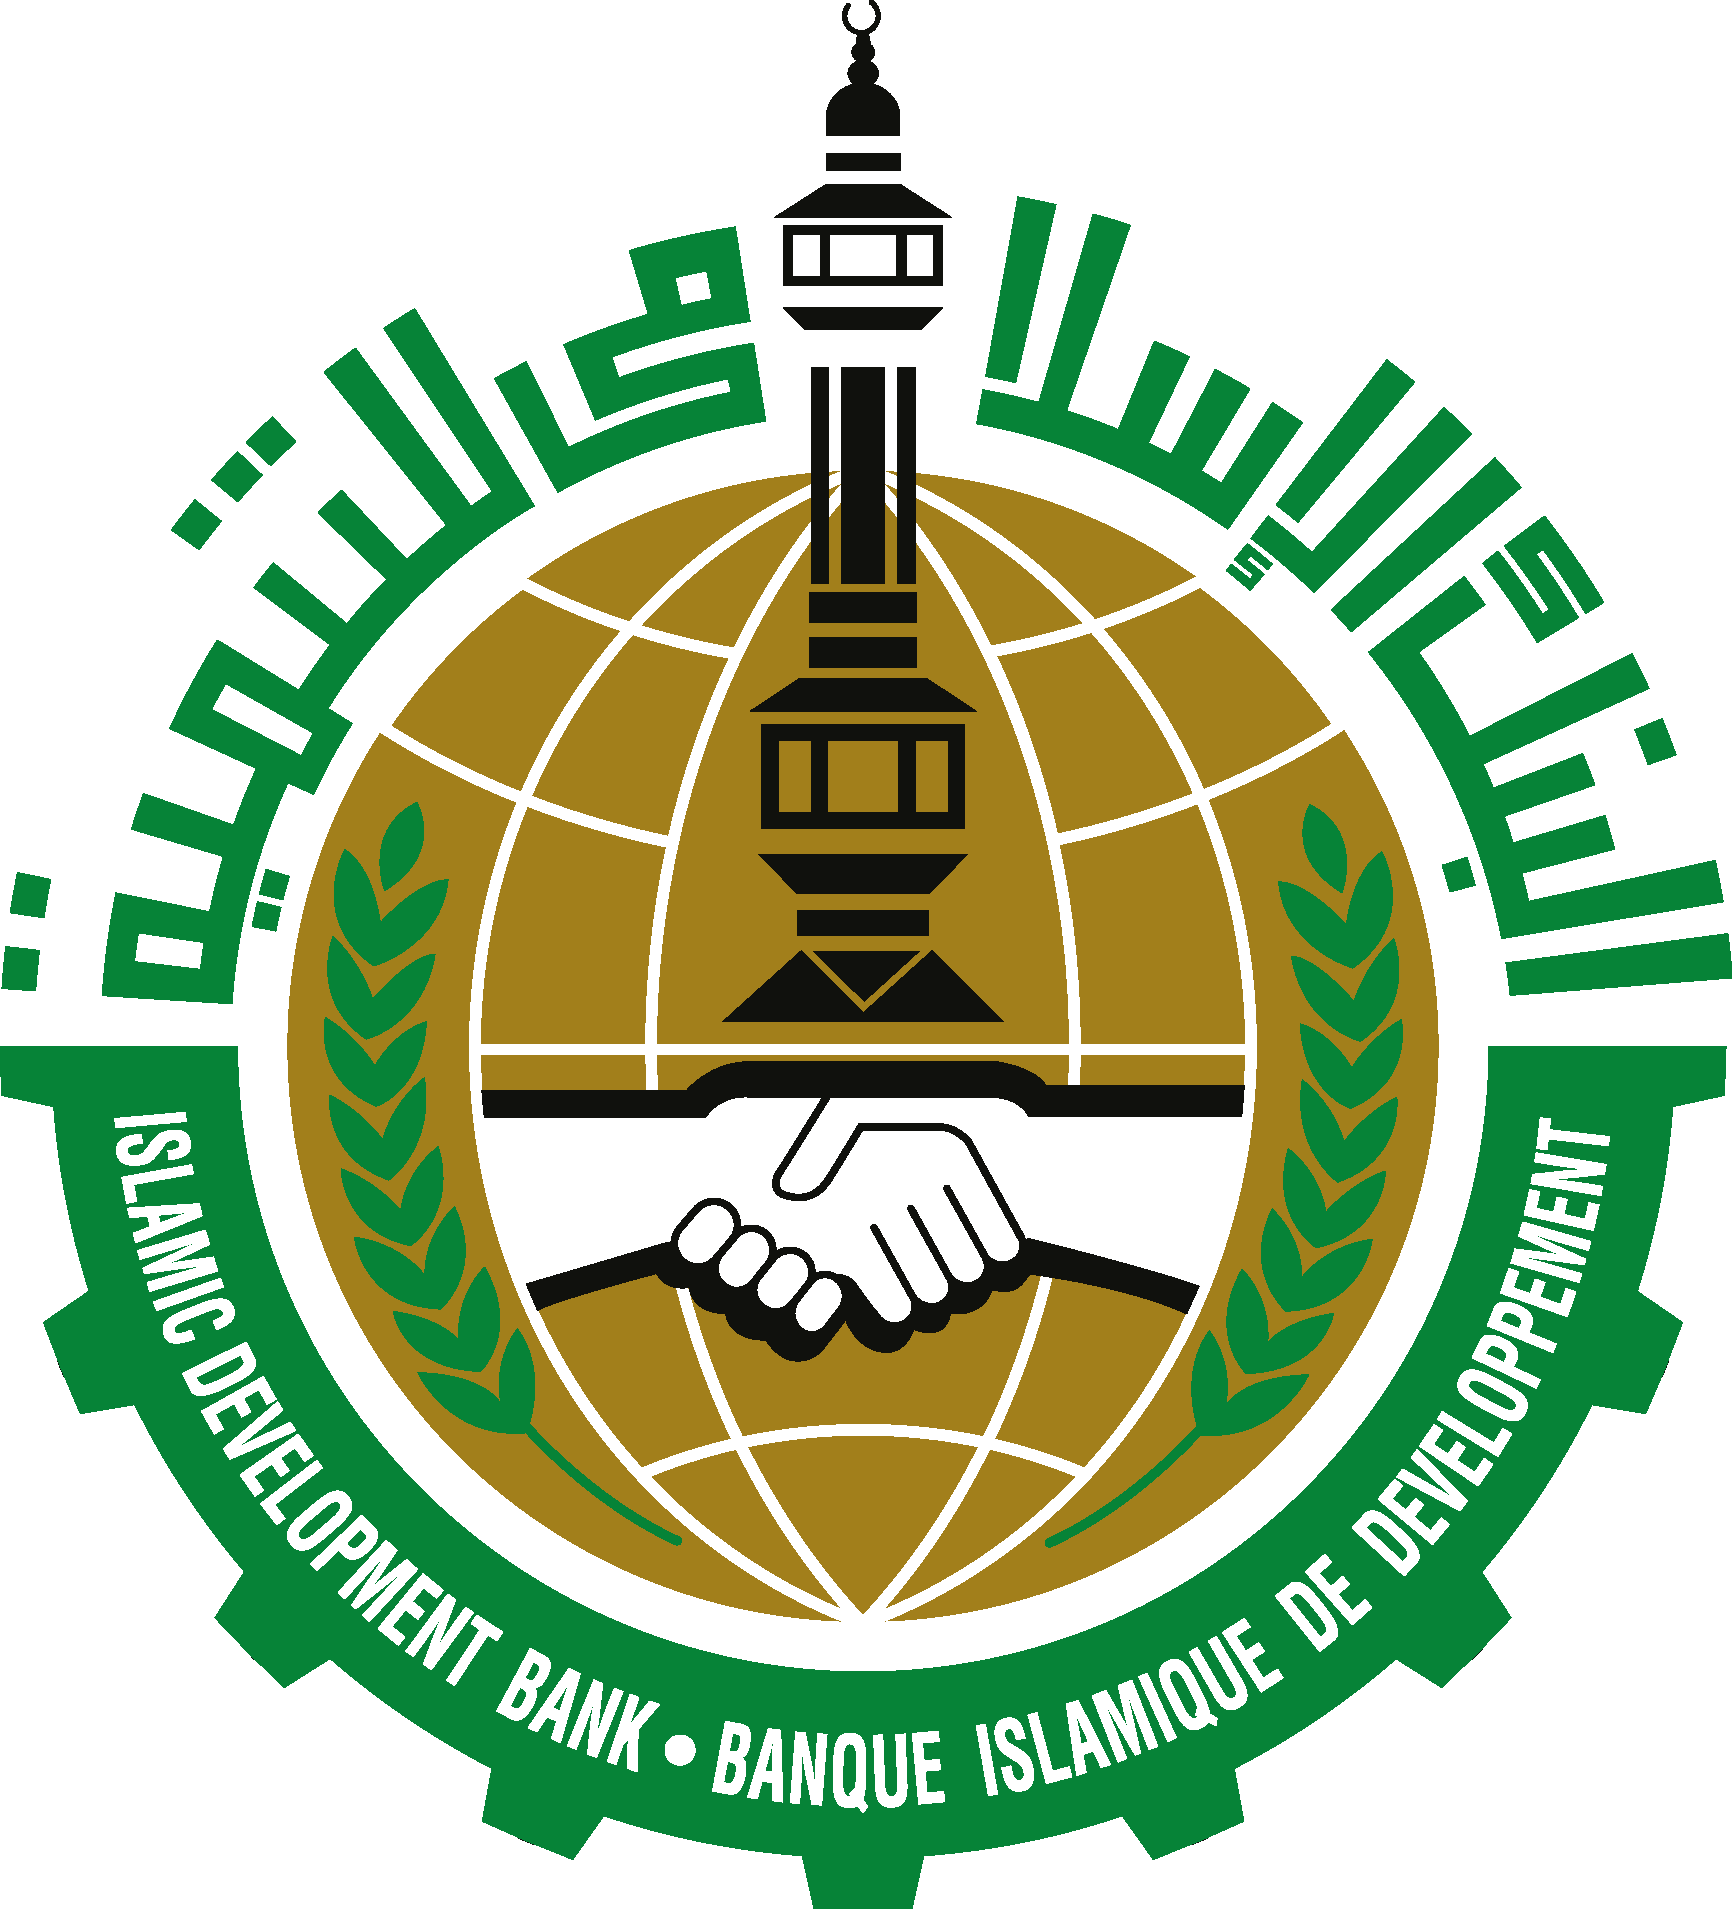 IsDB   Islamic Development Bank Logo png